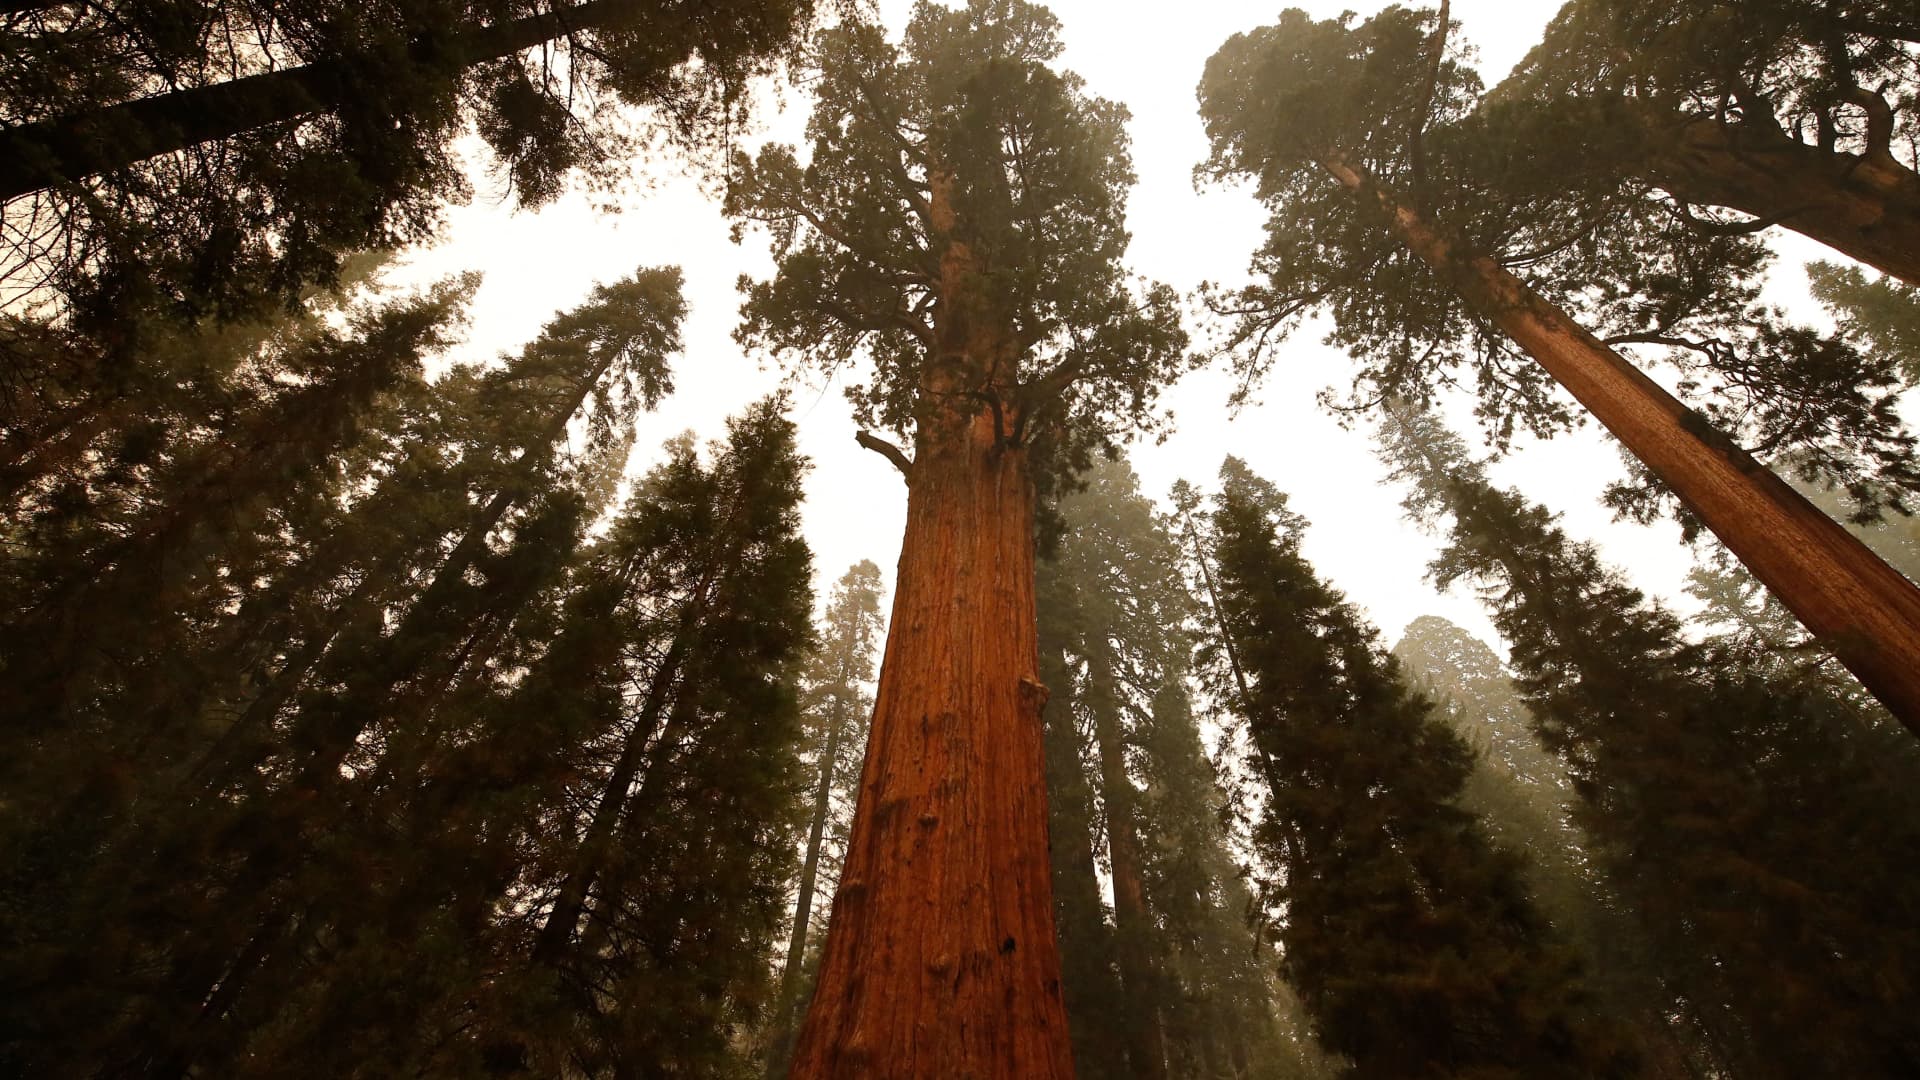 Yosemite fire grows as crews protect iconic sequoias